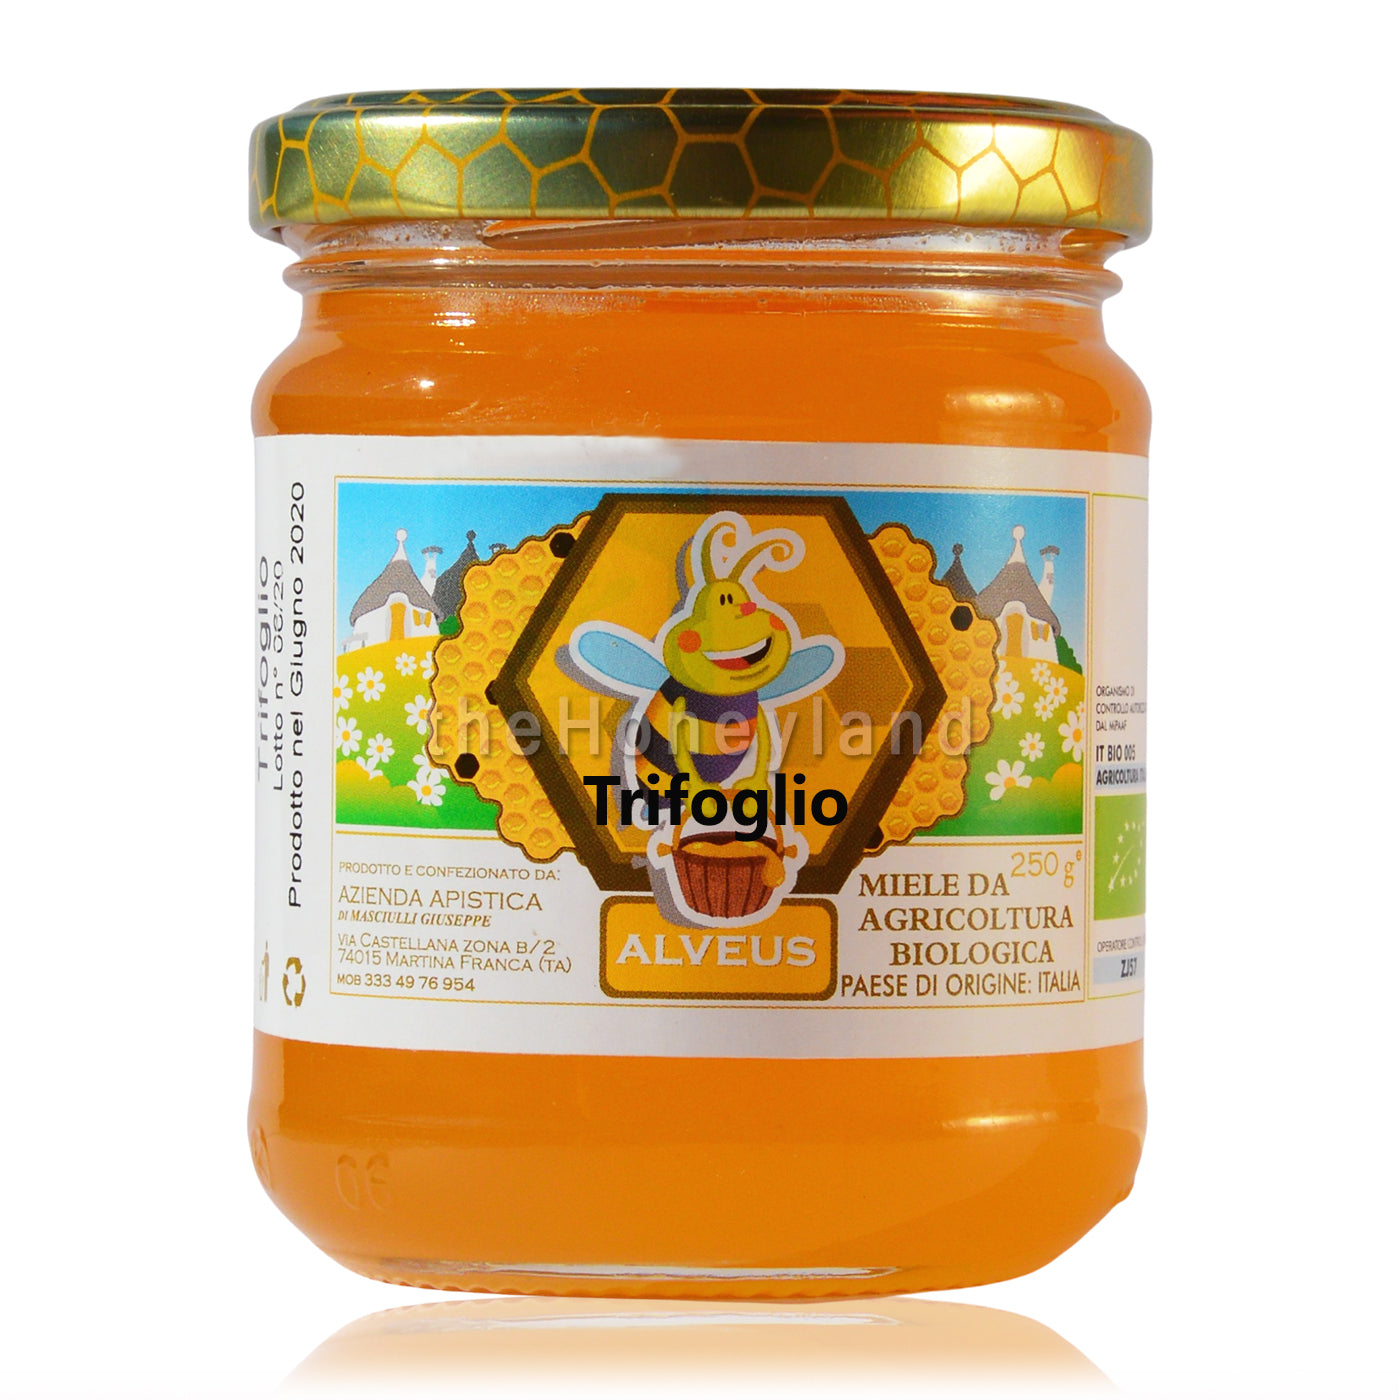 Clover Honey from Basilicata